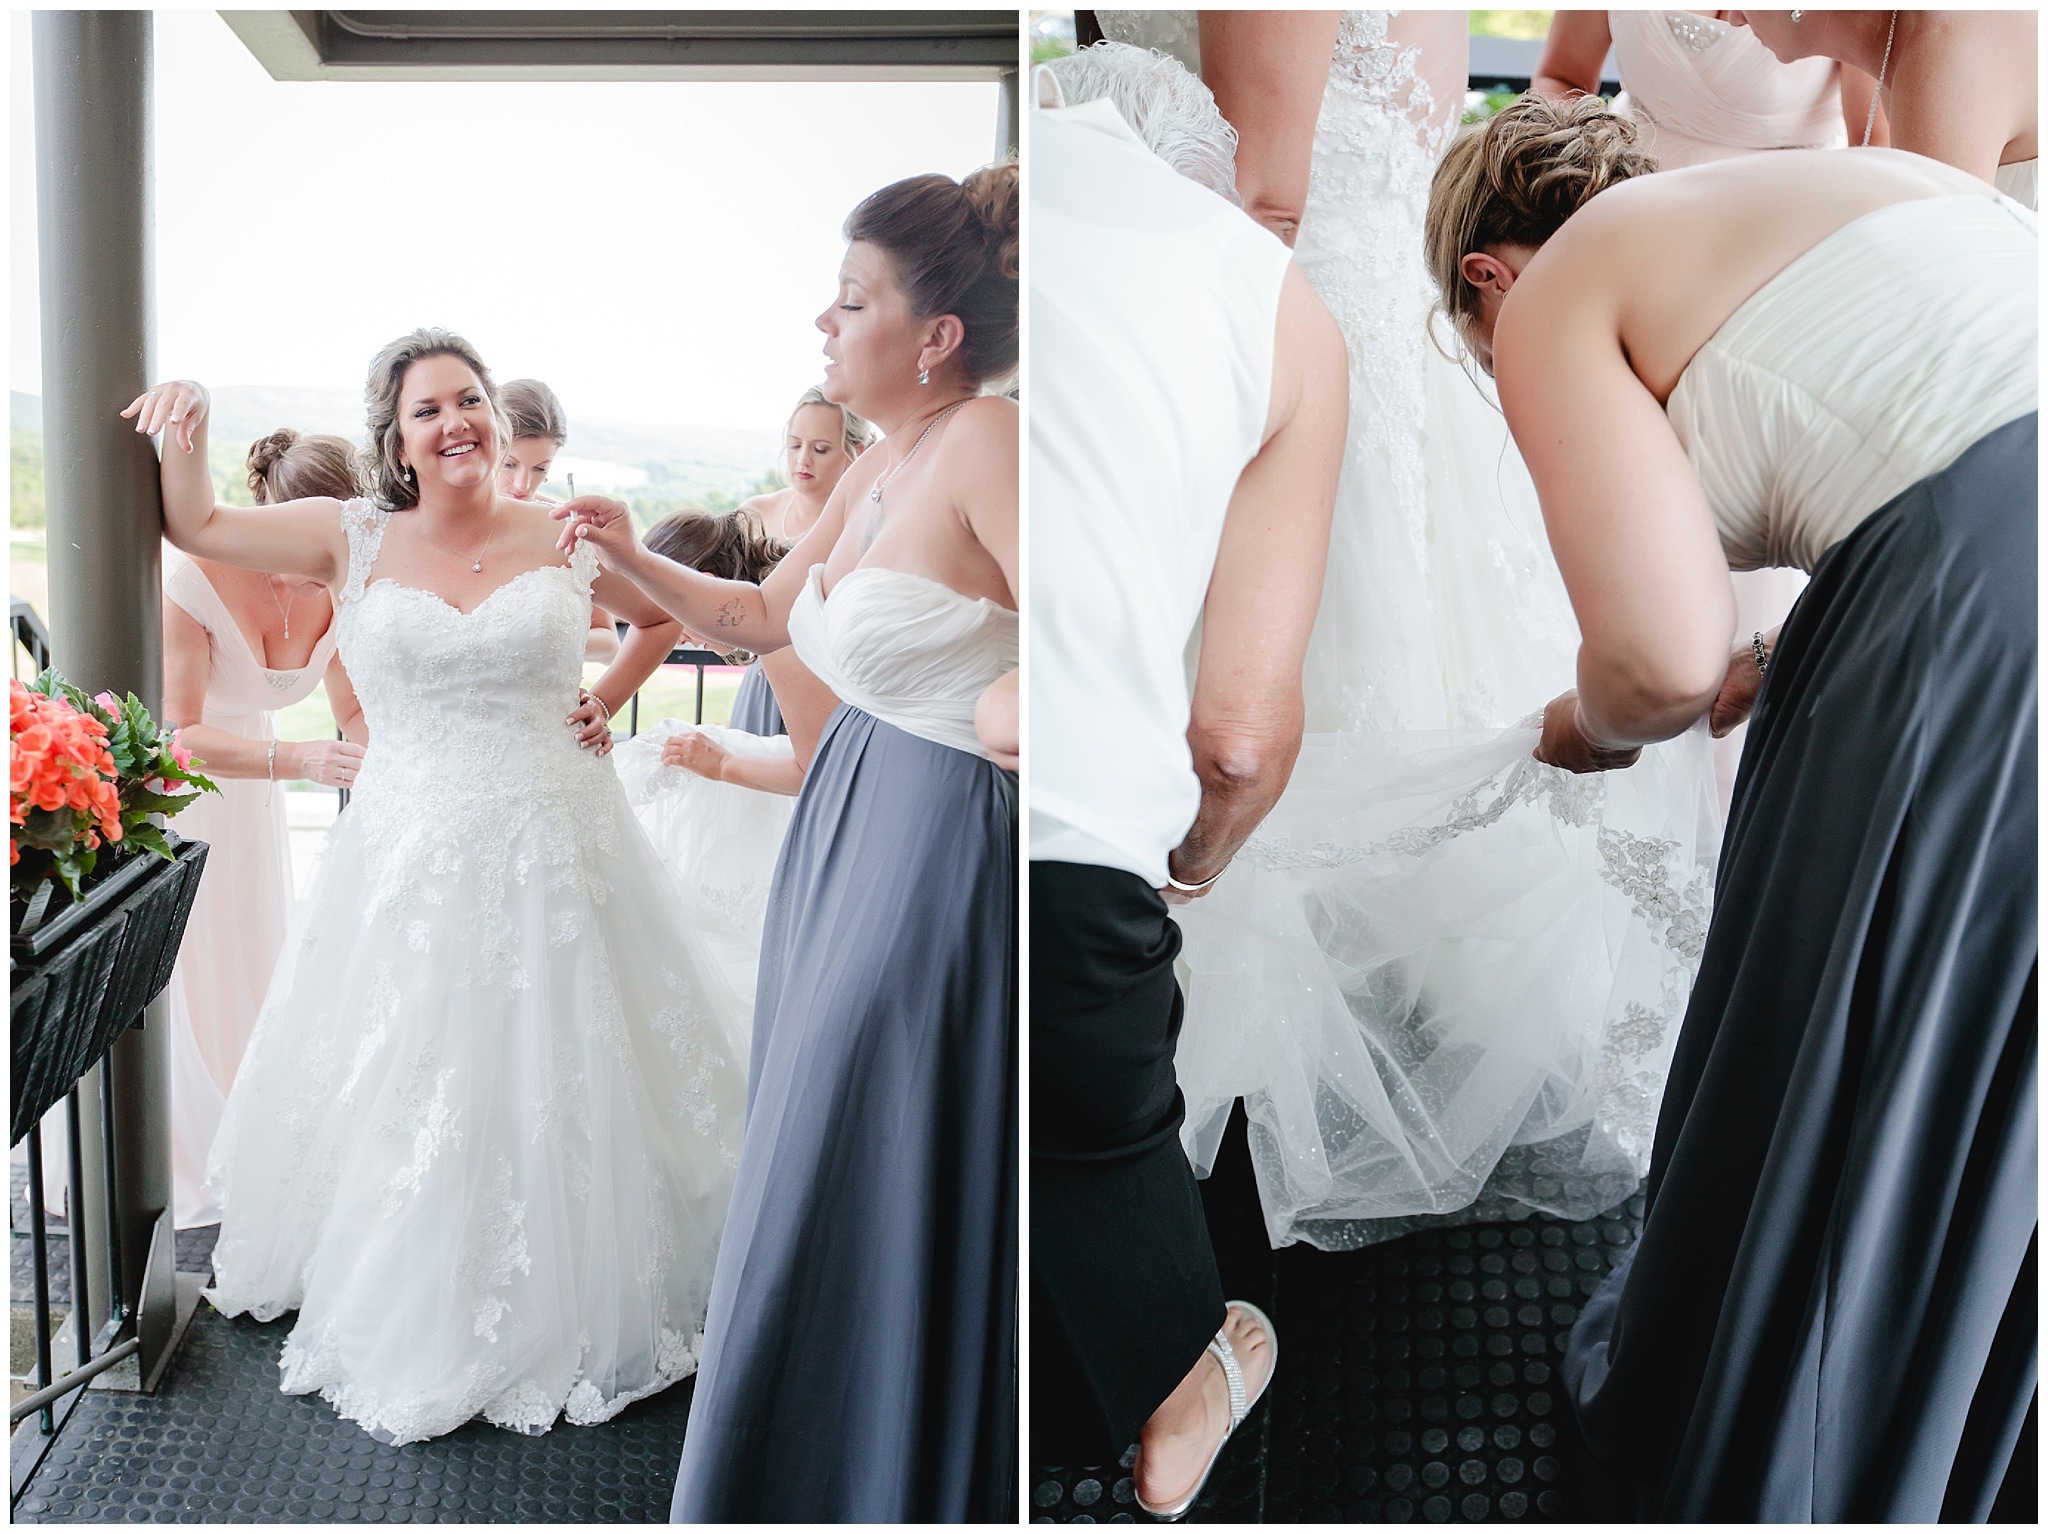 Bridesmaids bustle the bride's dress at Chestnut Ridge Golf Resort